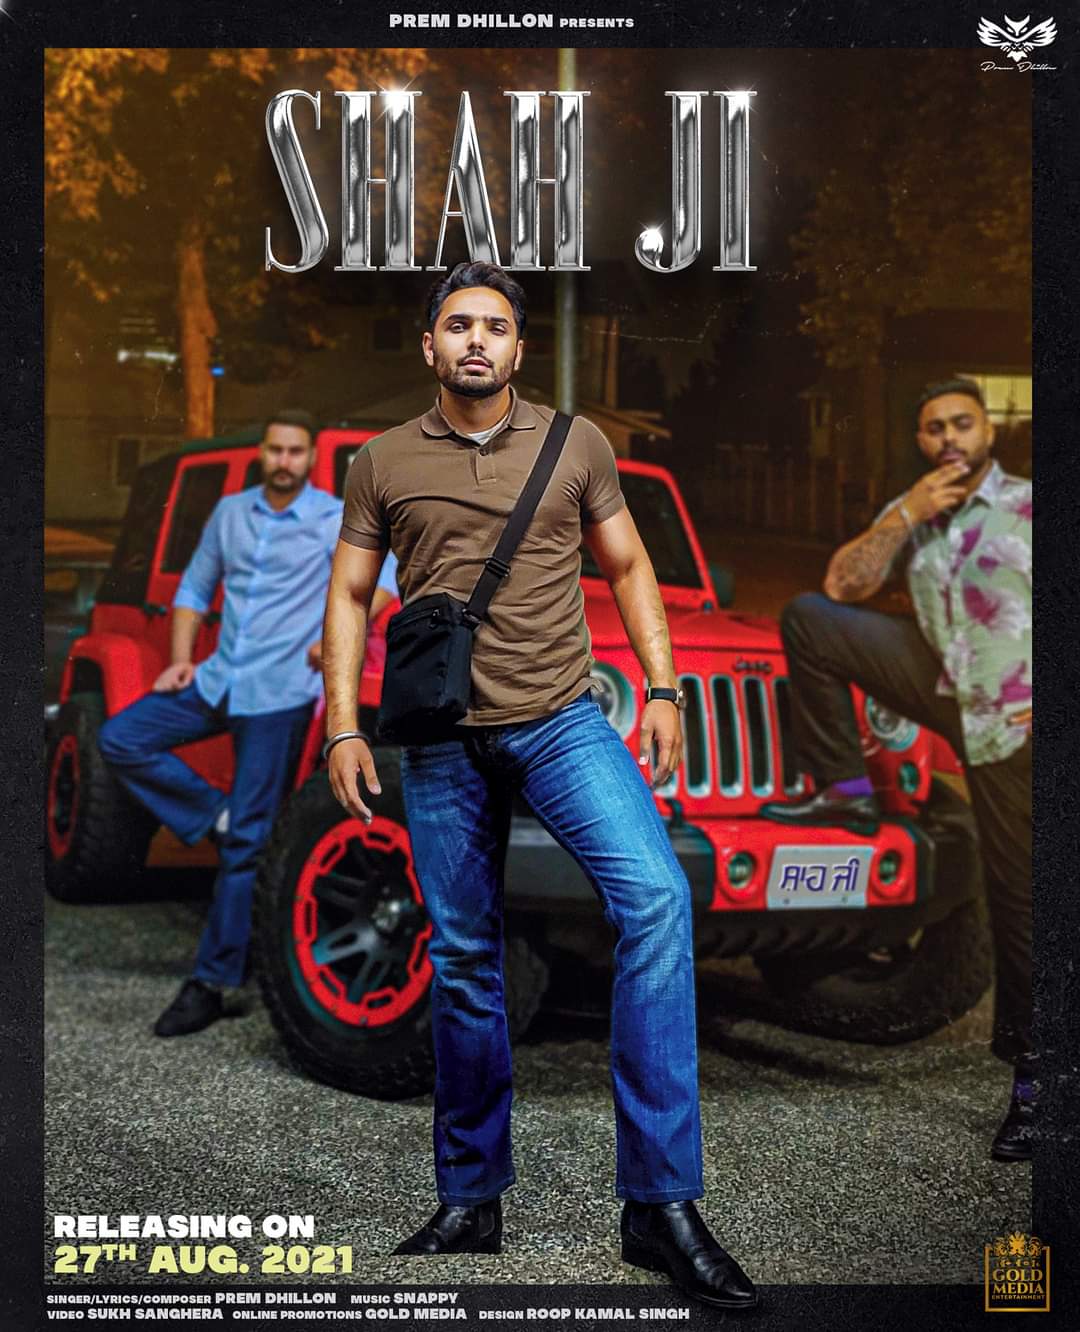 Shah ji song Poster